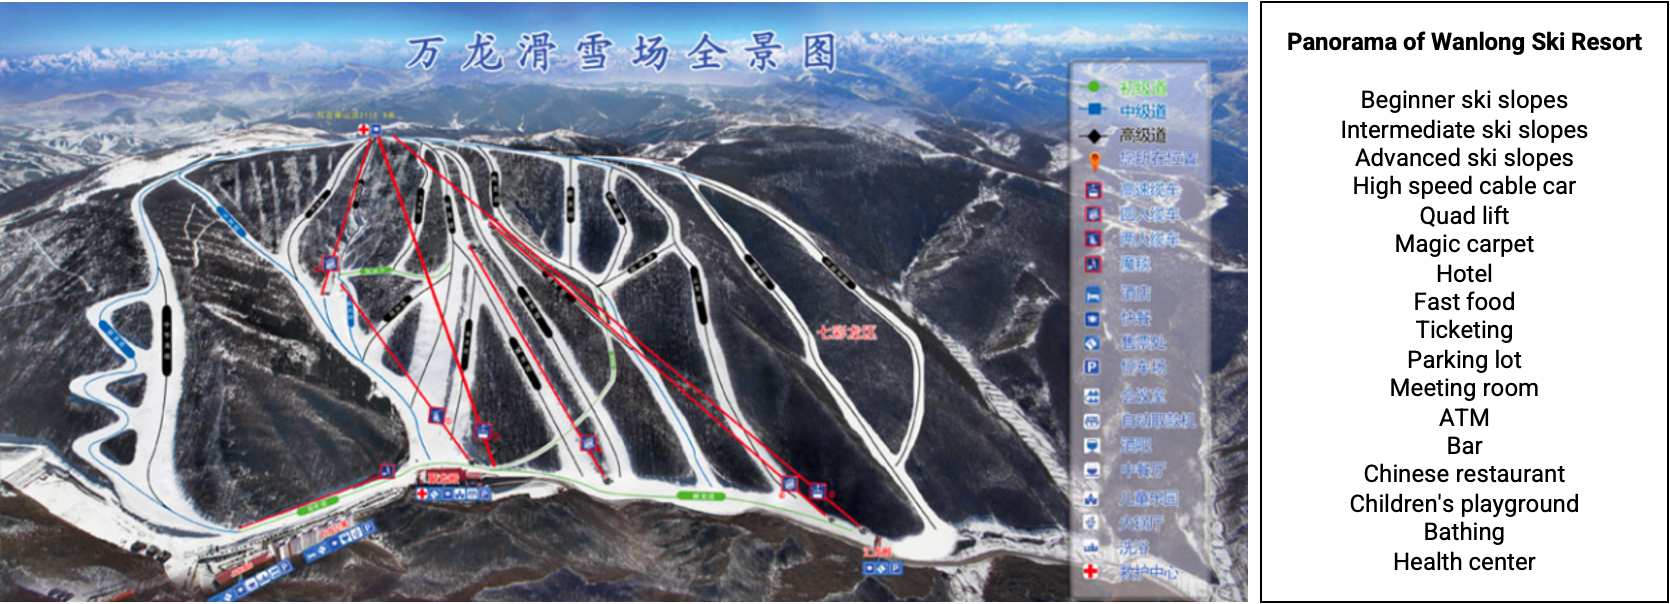 Chinese ski market